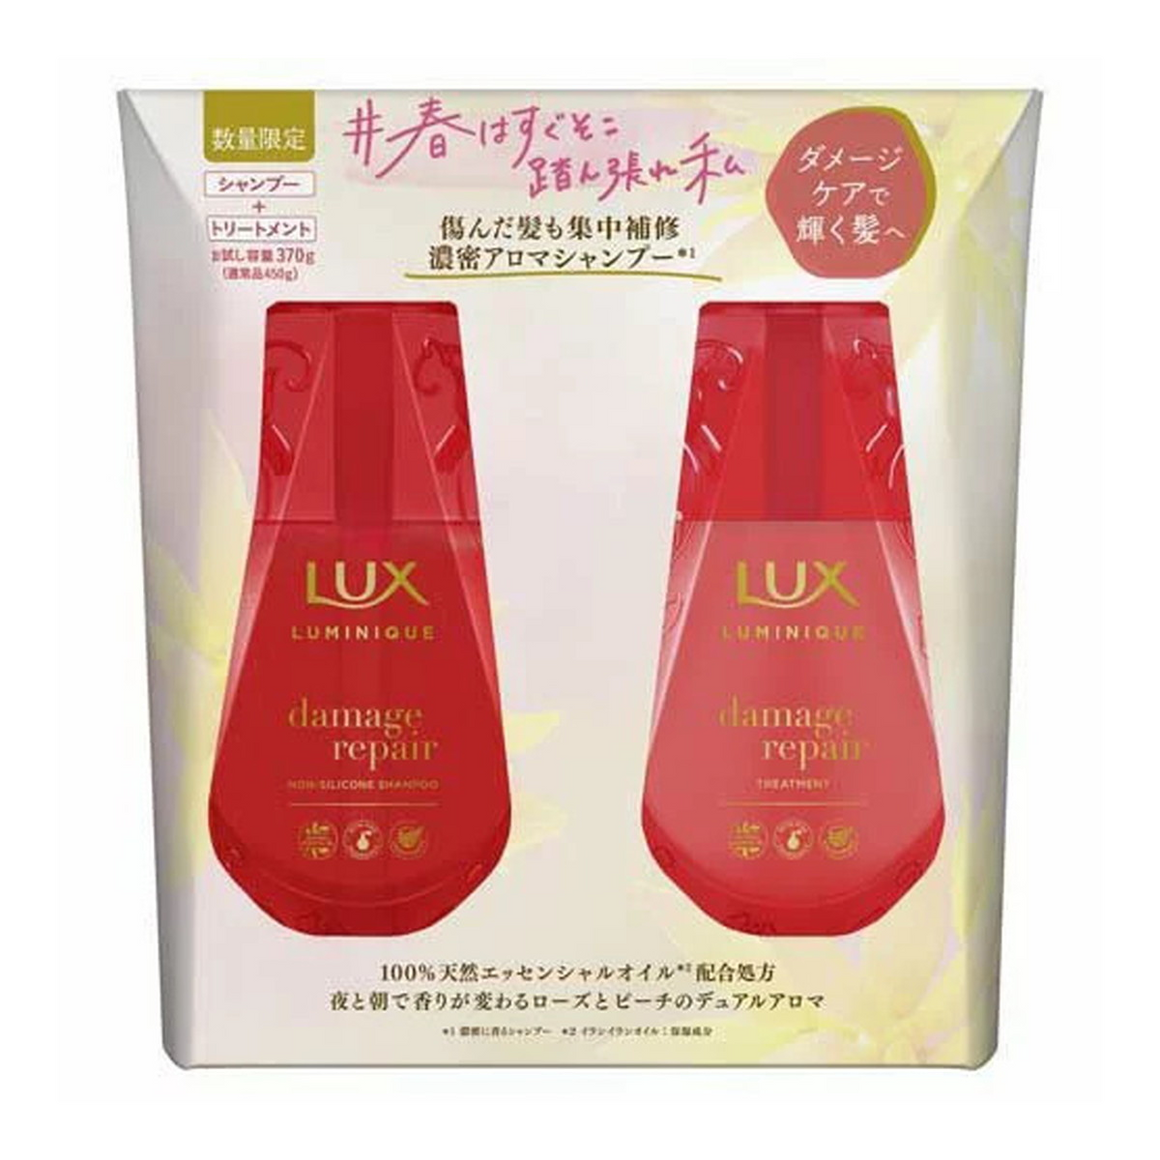 LUX Luminique Shampoo + Conditioner- Damage Repair (370g x 2) ラックス ルミニーク ダメージリペア お試し容量ポンプペア